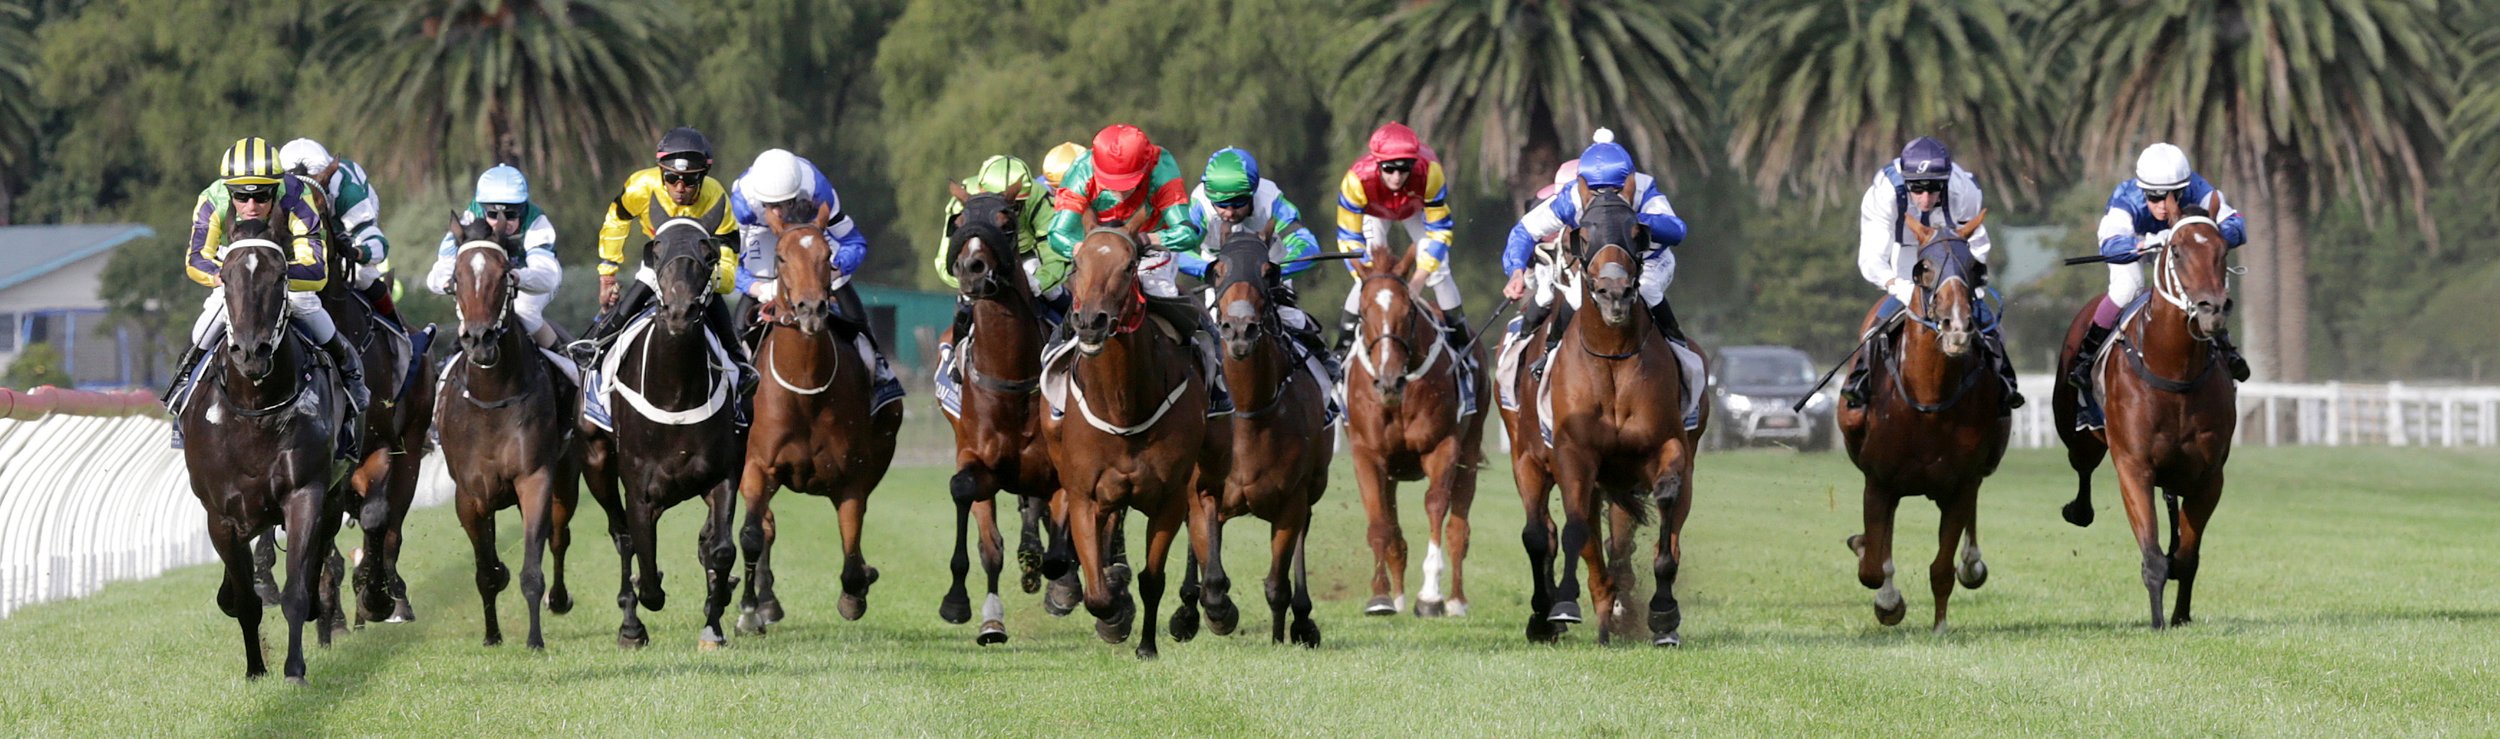 NZ Horses Racing Banner.jpg